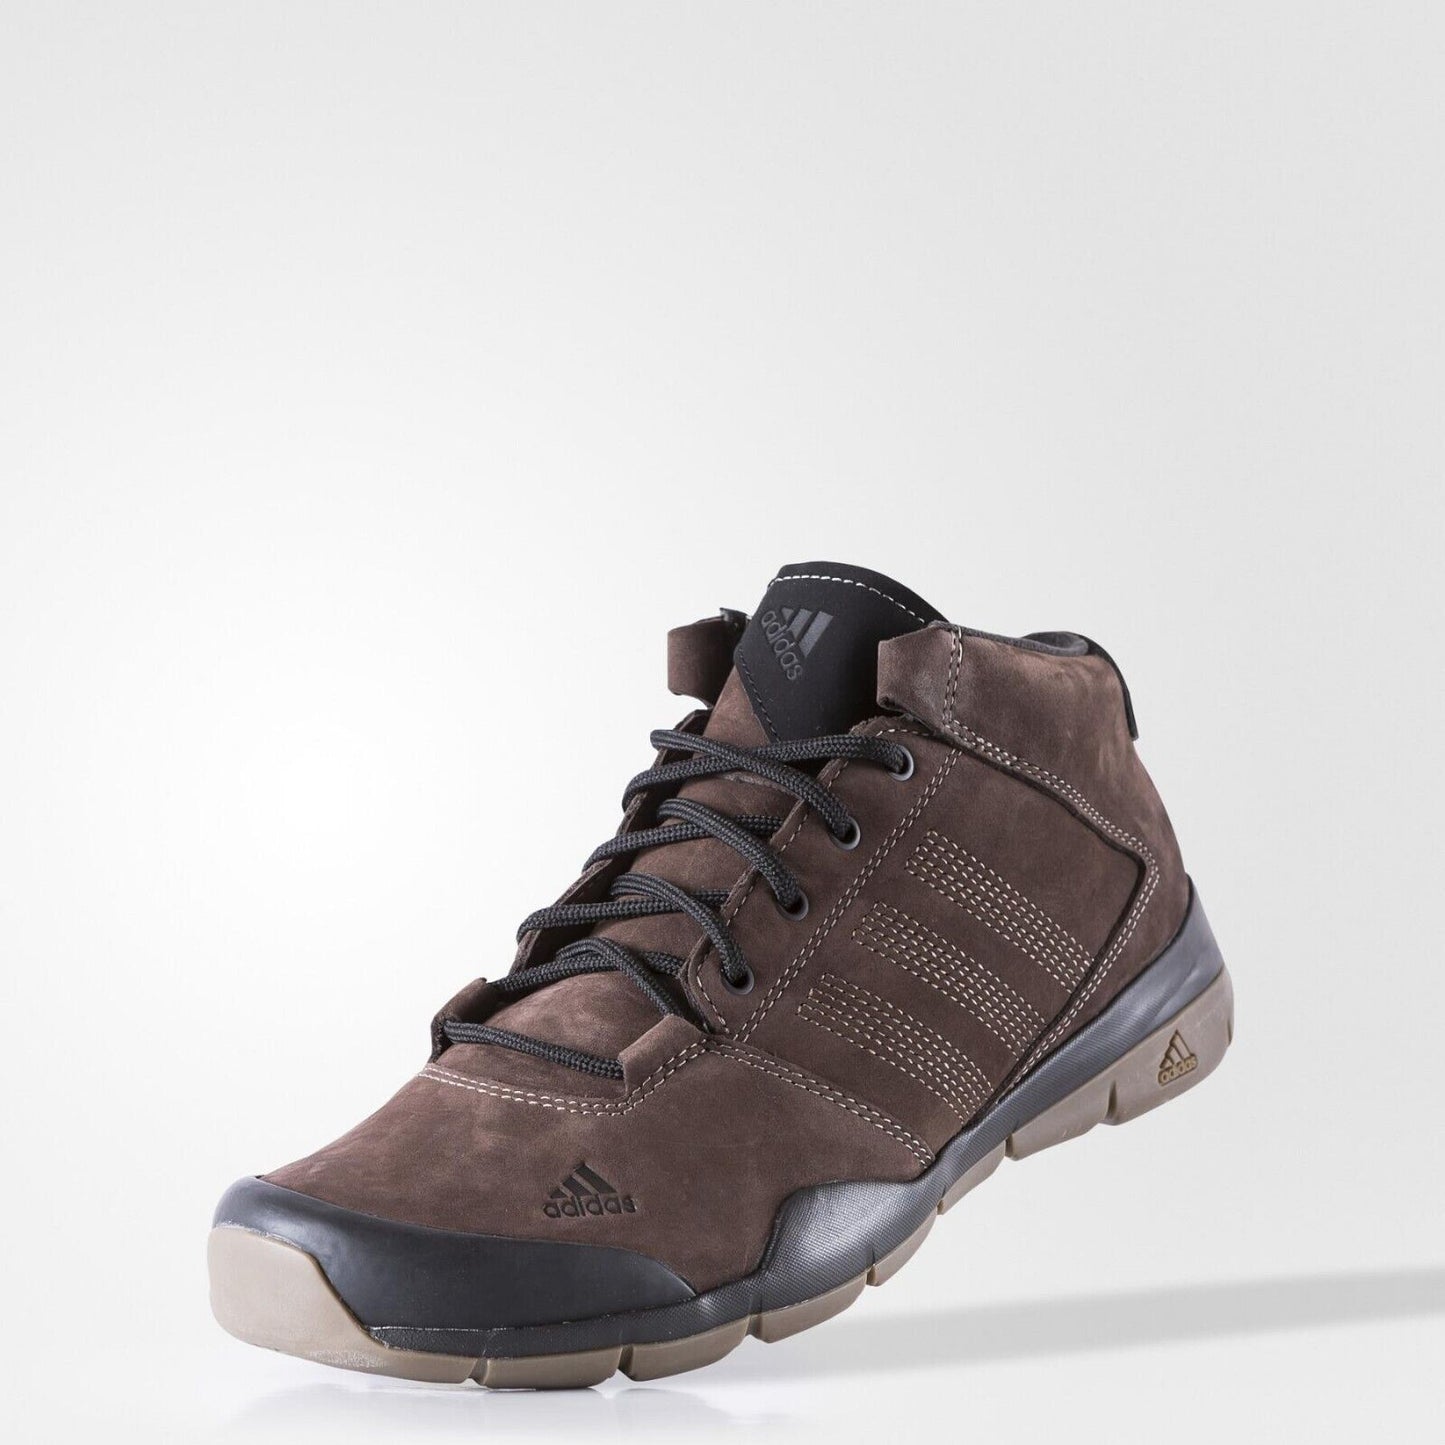 adidas Anzit DLX Mid Mens Hiking Boots SIZE 11.5 Walking Shoes Trail Nubuck